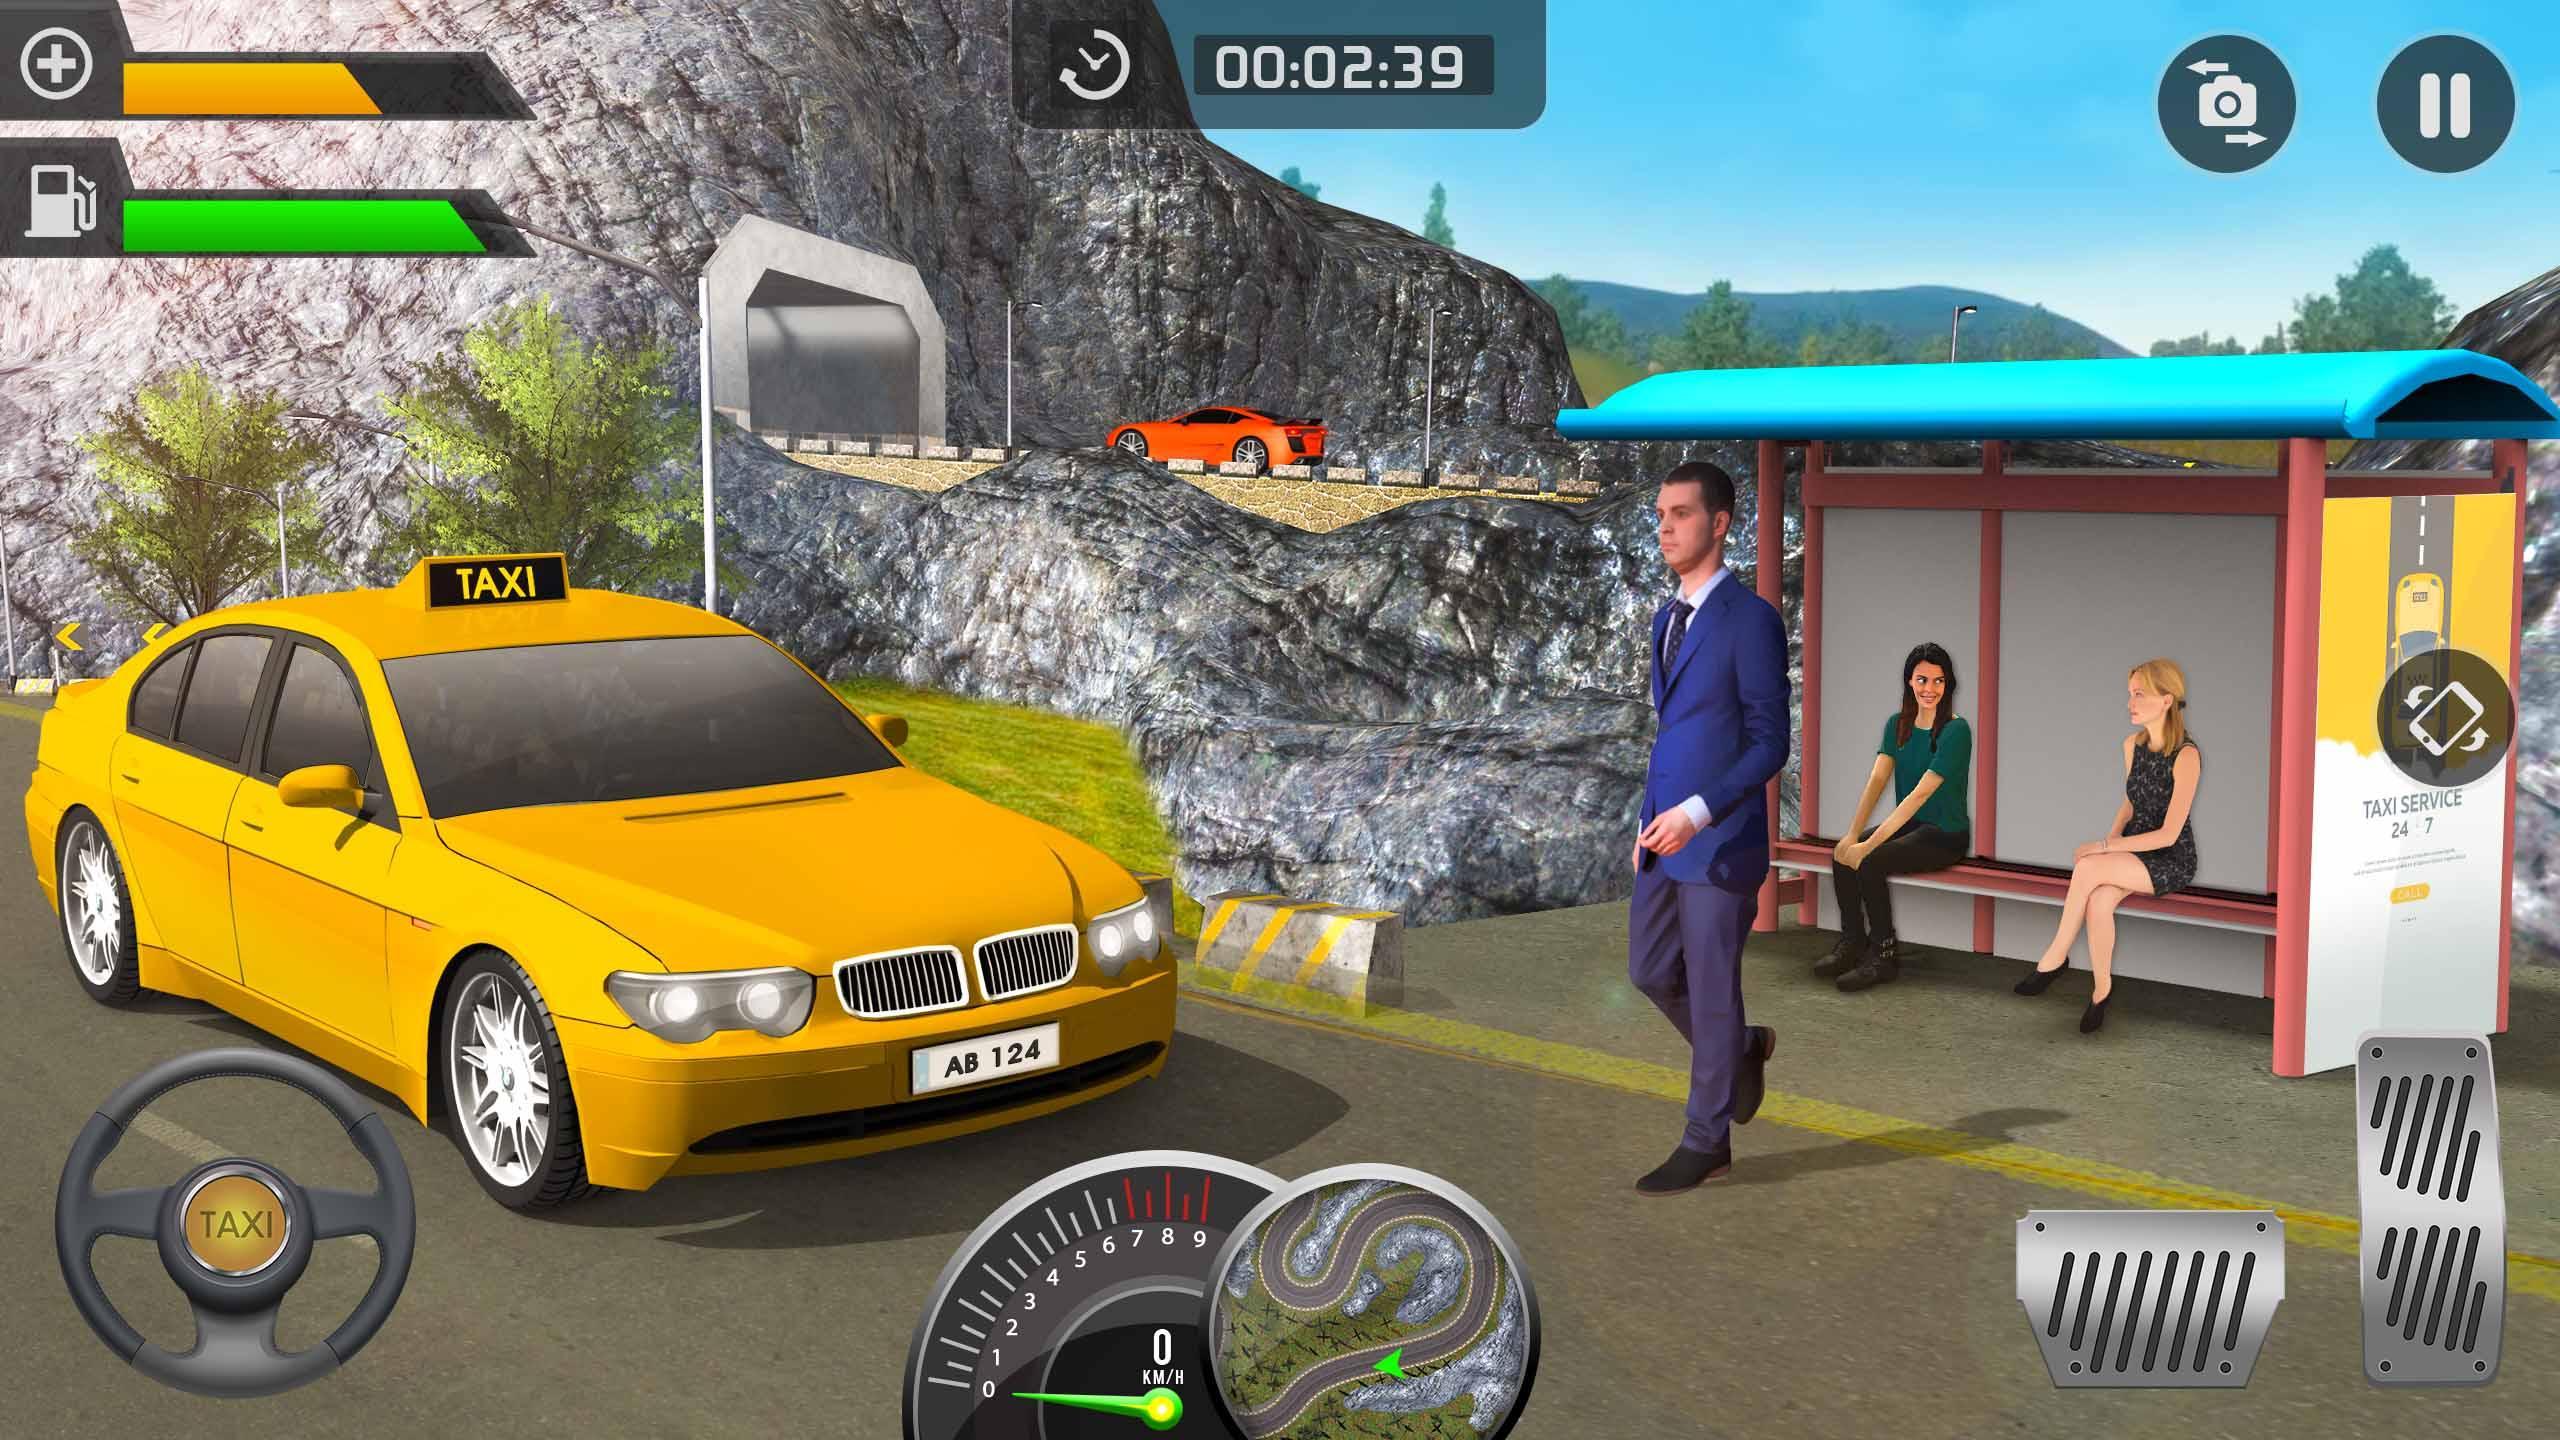 Modern Taxi Drive Parking 3D Game: Taxi Games 2020 1.1.06 Screenshot 13